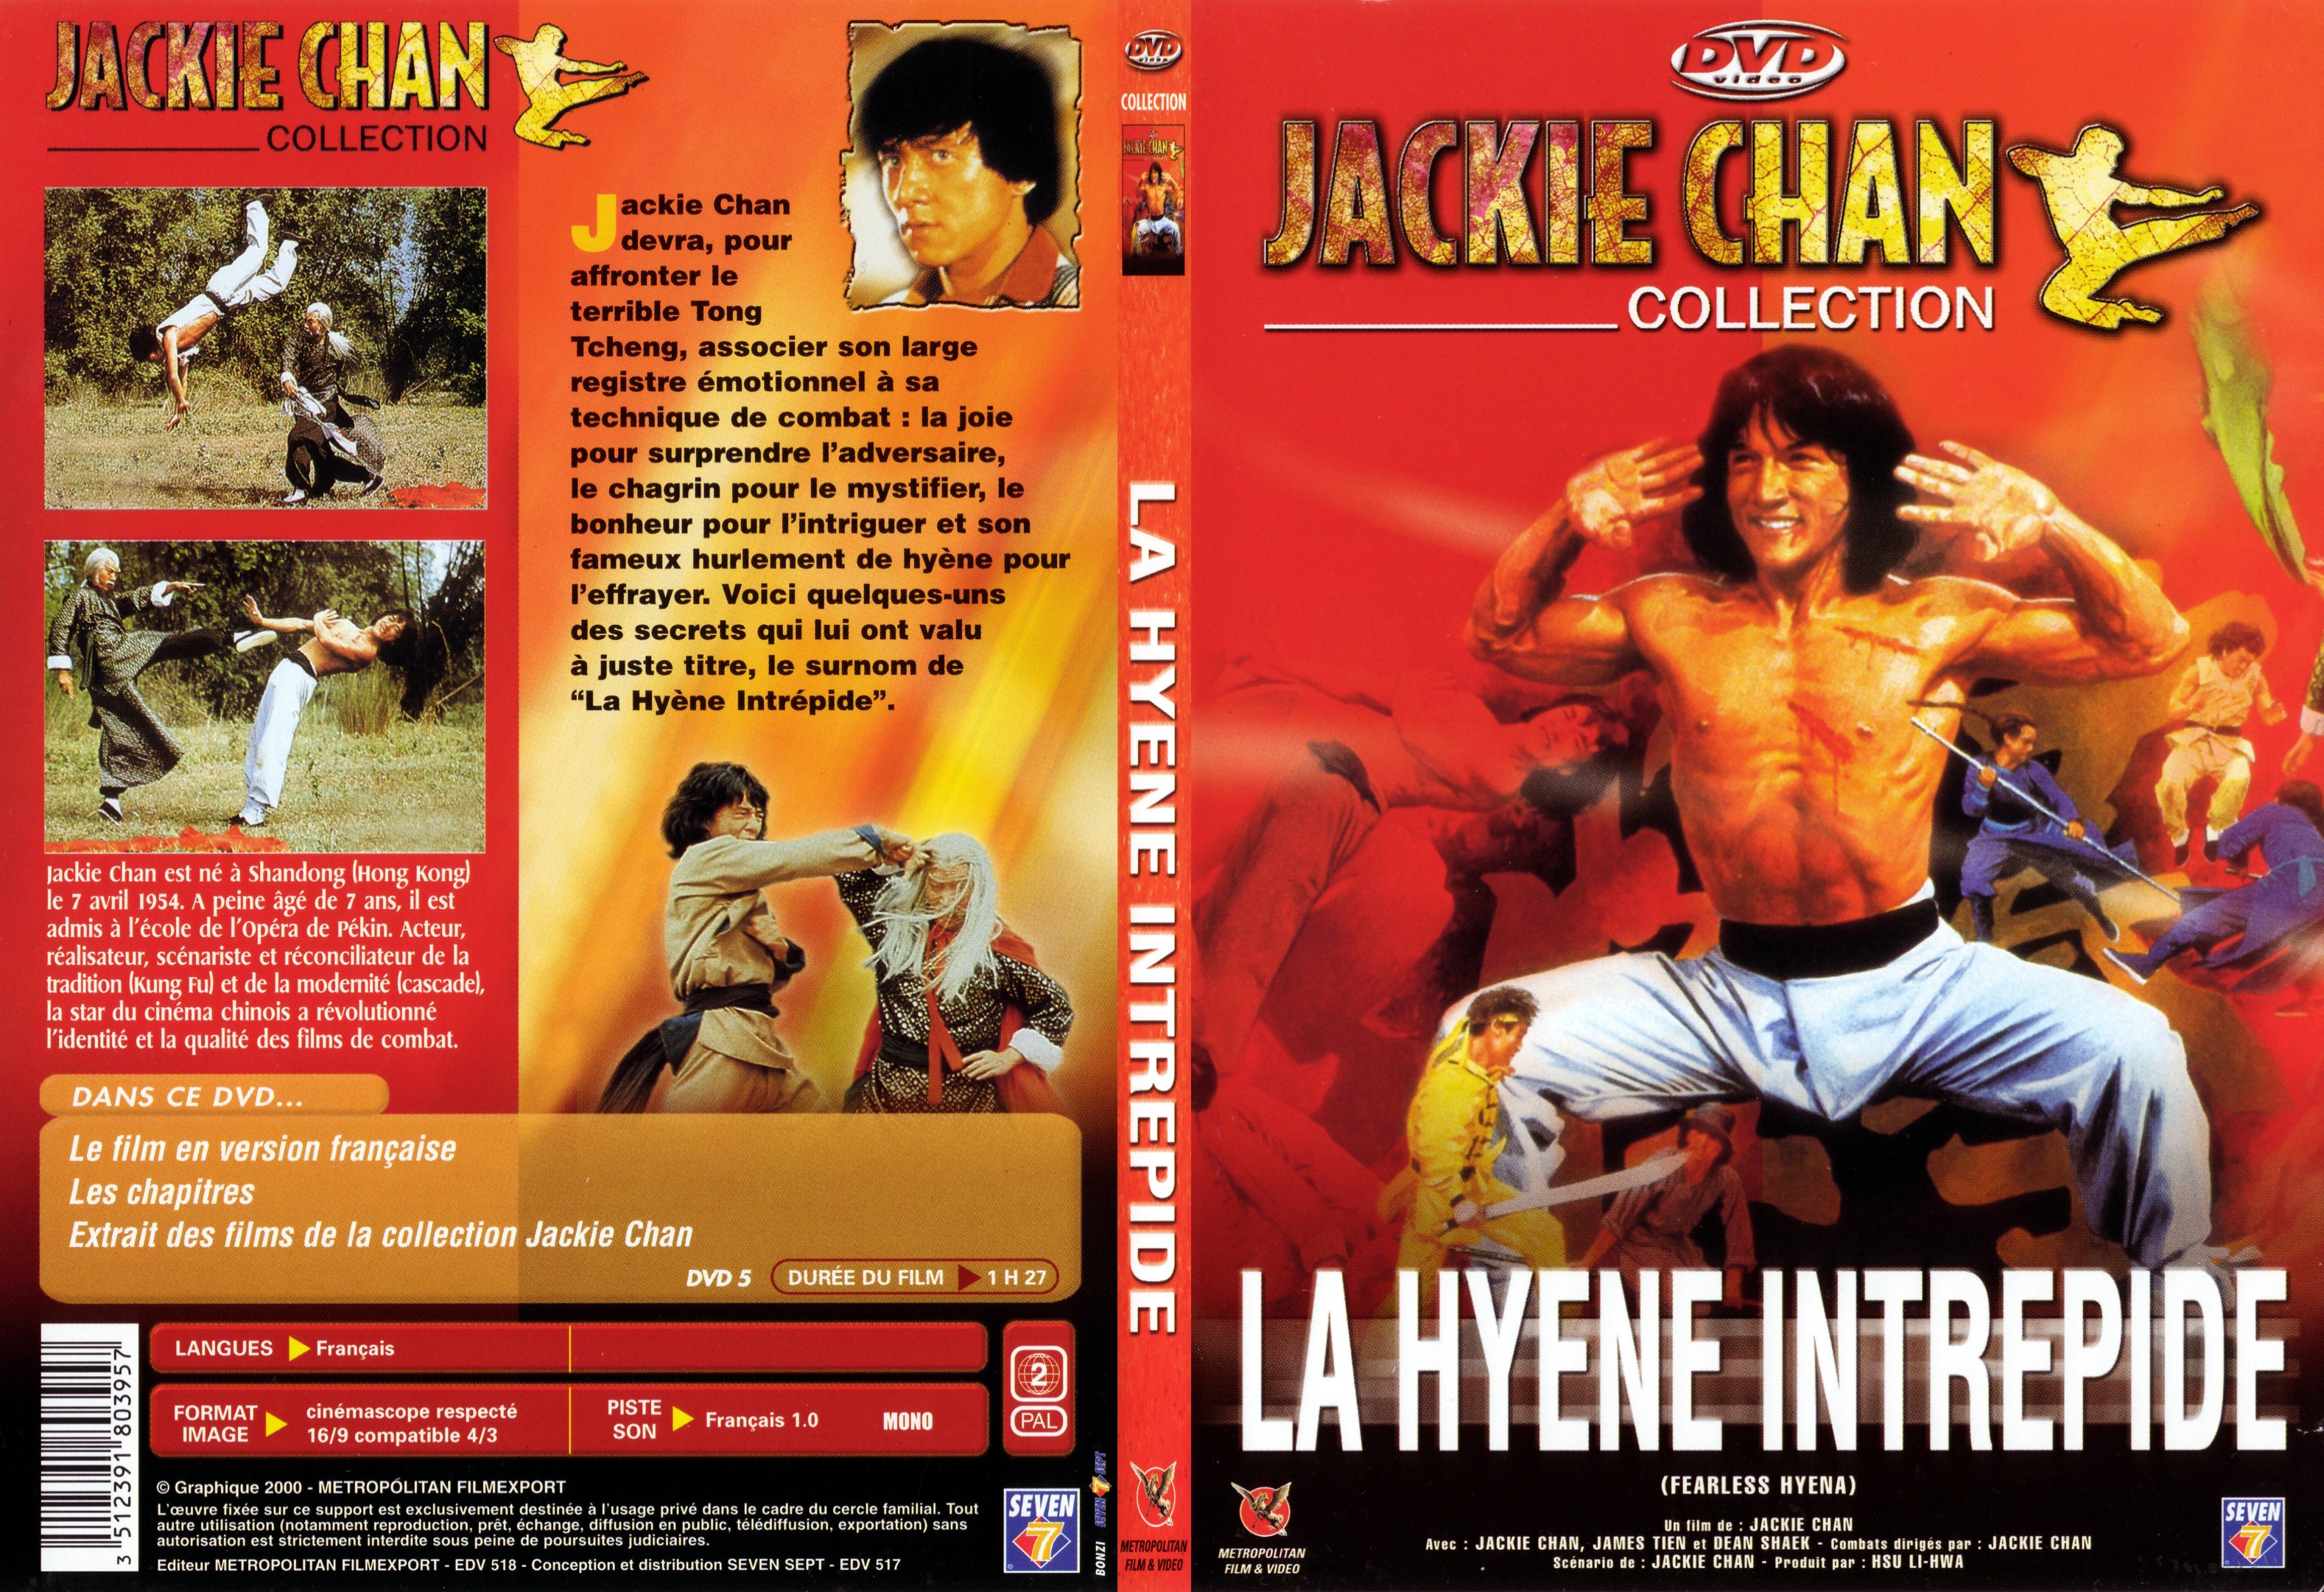 Jaquette DVD La hyene intrpide - SLIM